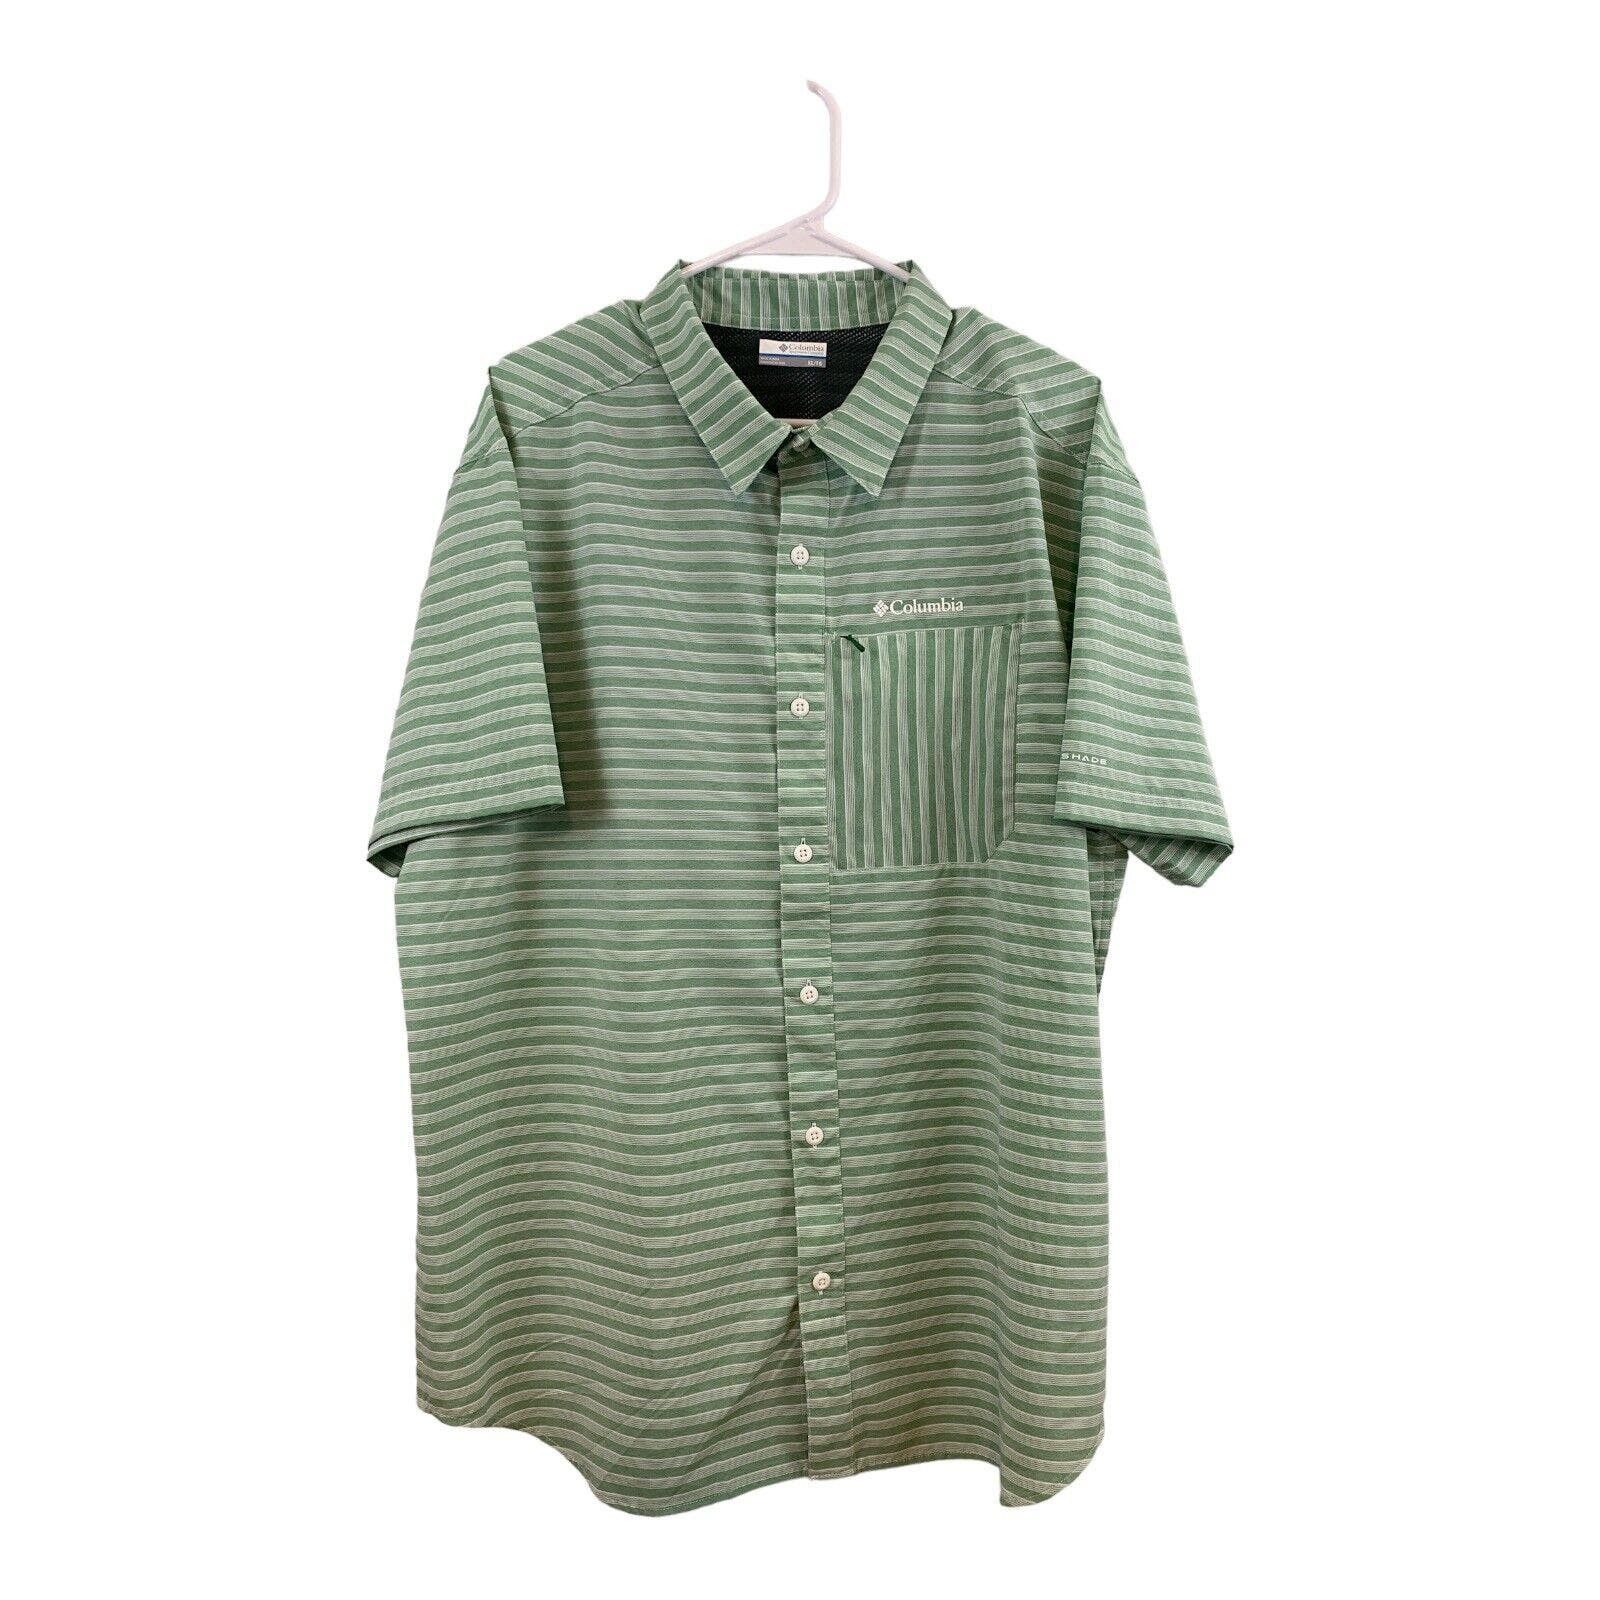 Columbia Columbia Men's Green Striped Omni Shade Outdoor Shirt XL